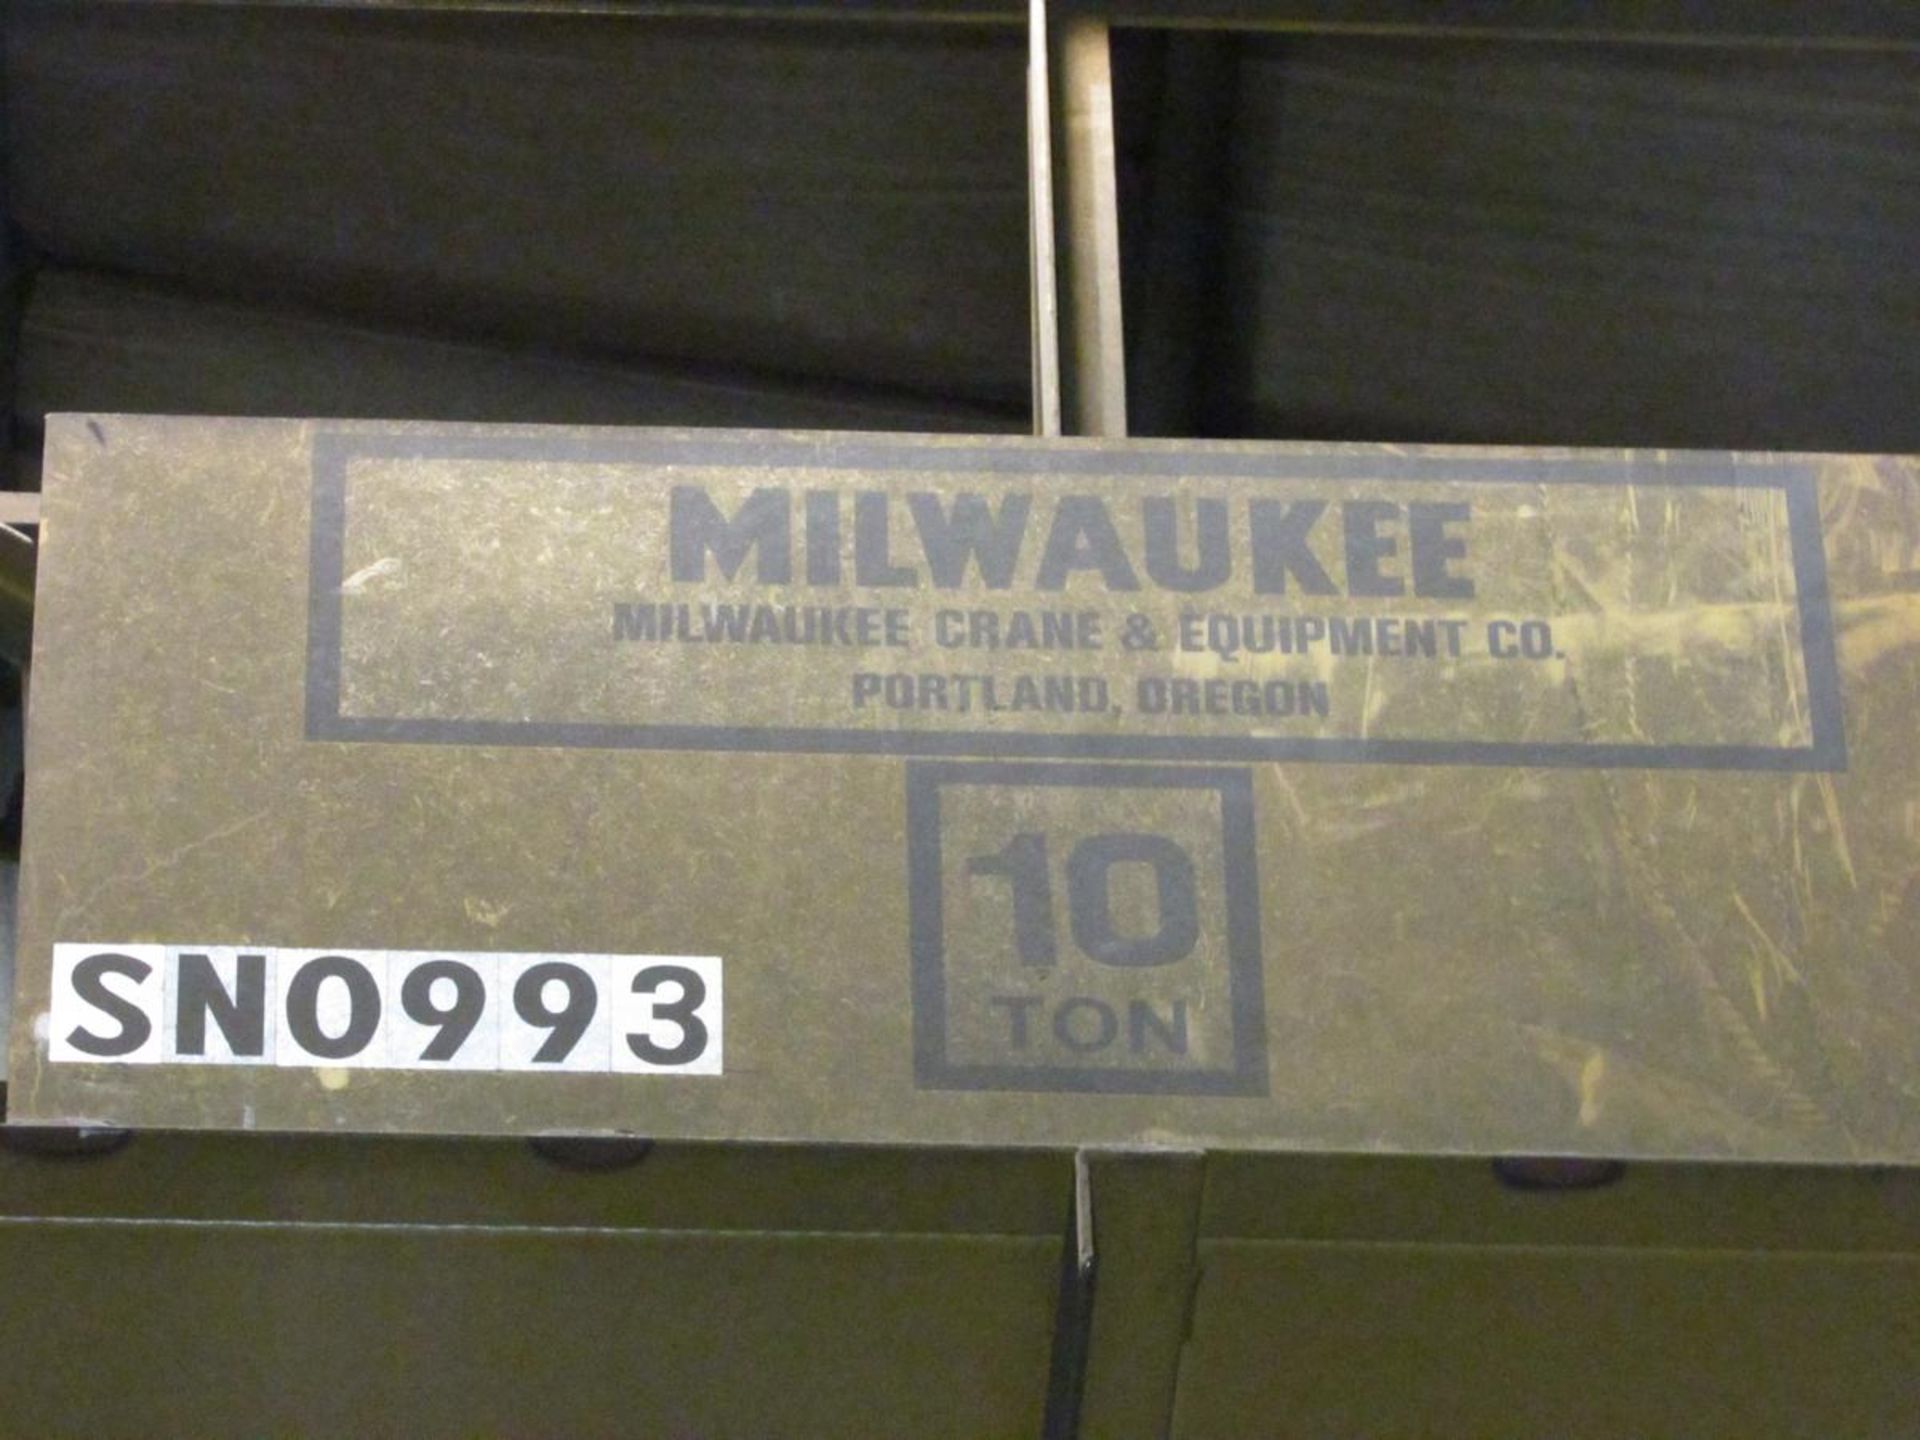 Milwaukee Crane 10 Ton Top Running Double Girder Bridge Crane [Late Delivery] - Image 6 of 6